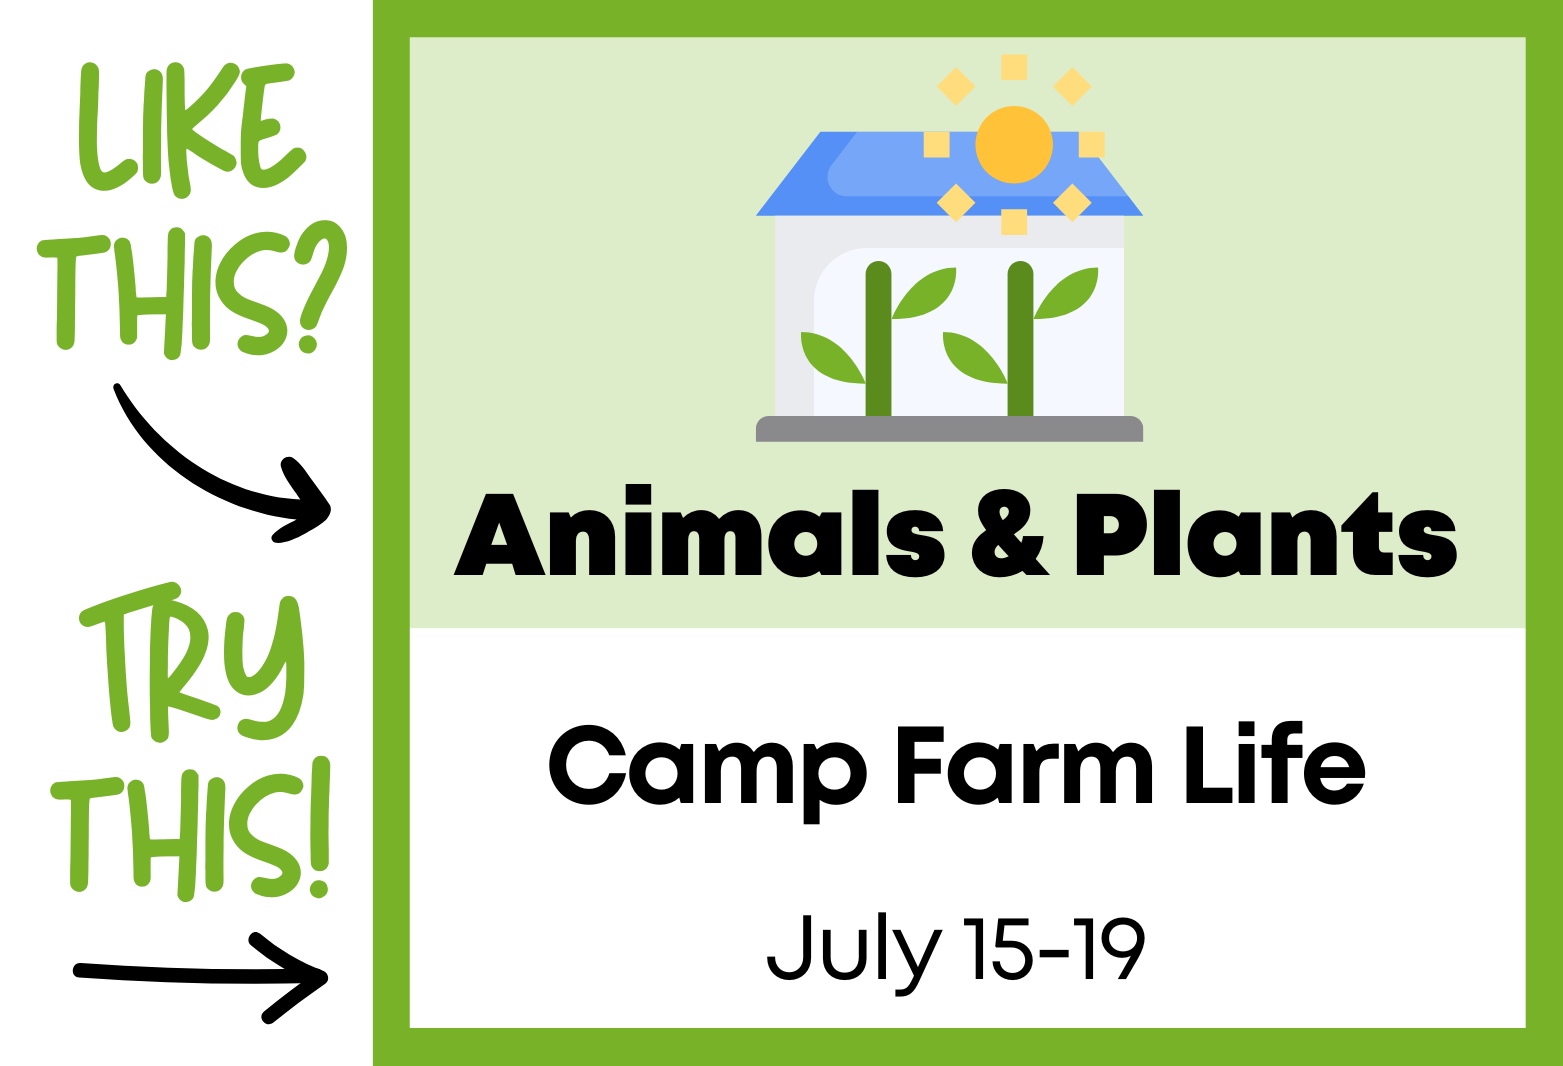 Camp Farm Life, July 15-19